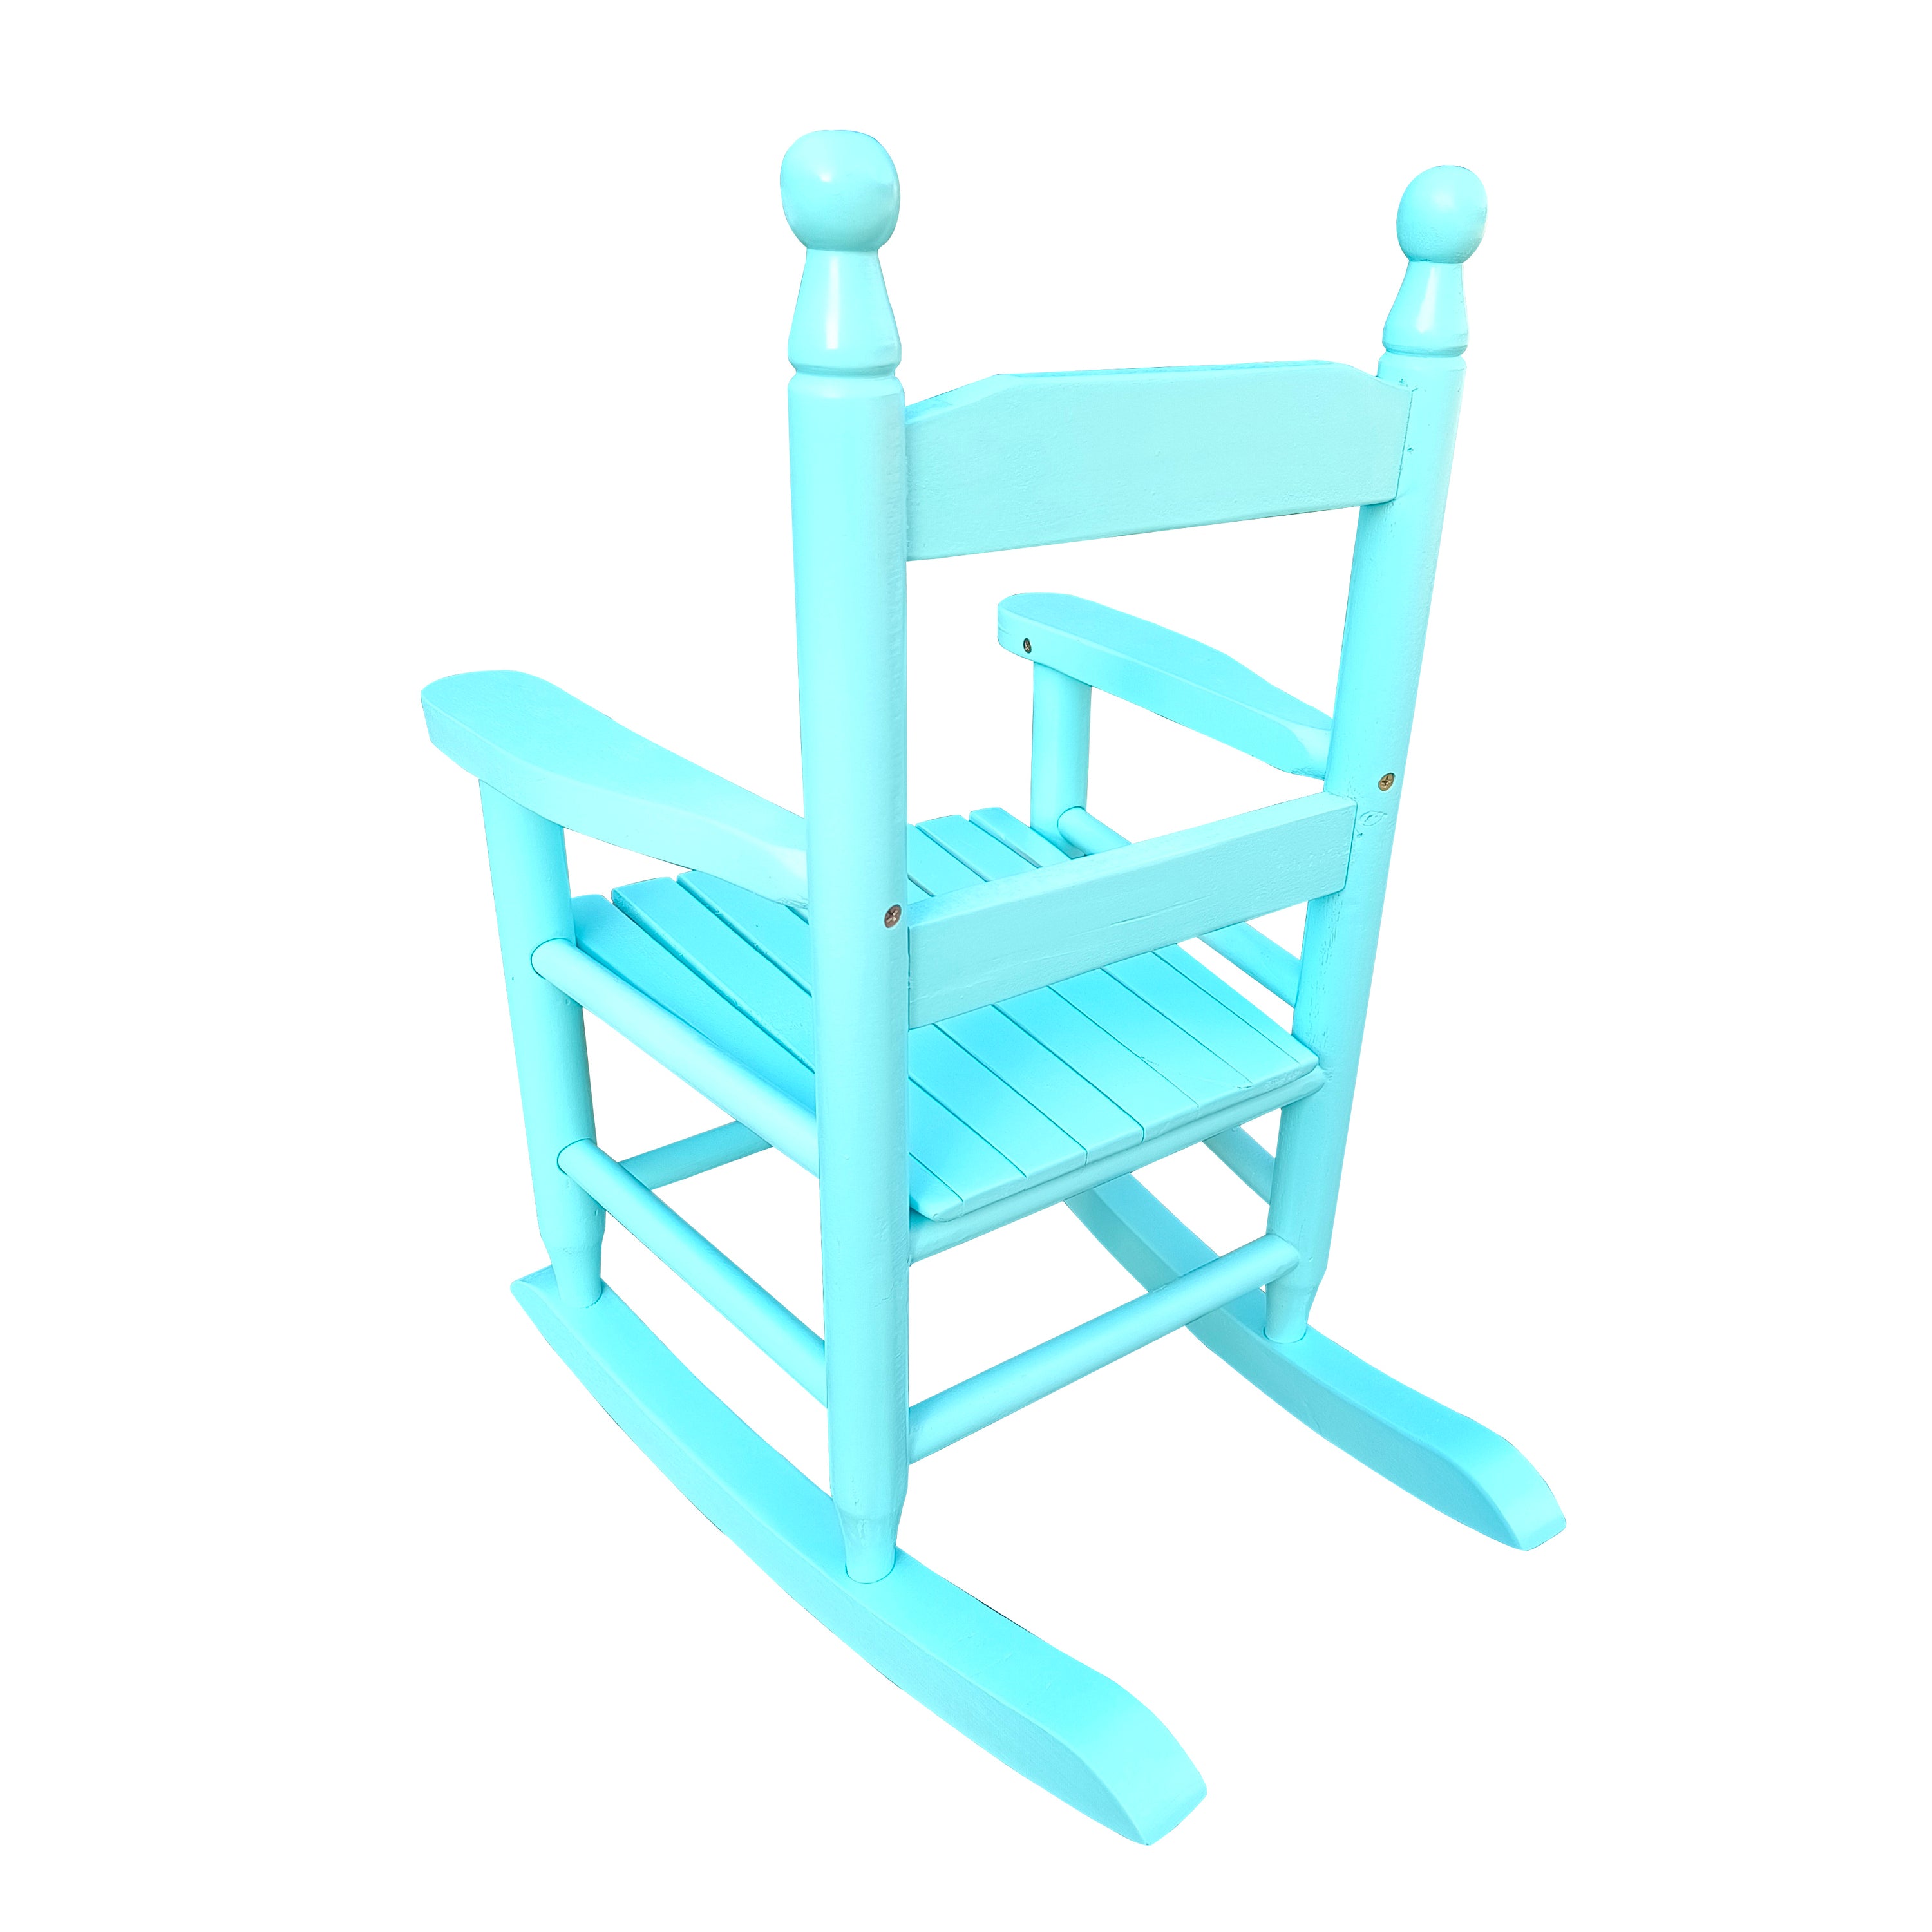 Children's Rocking Light Blue Chair